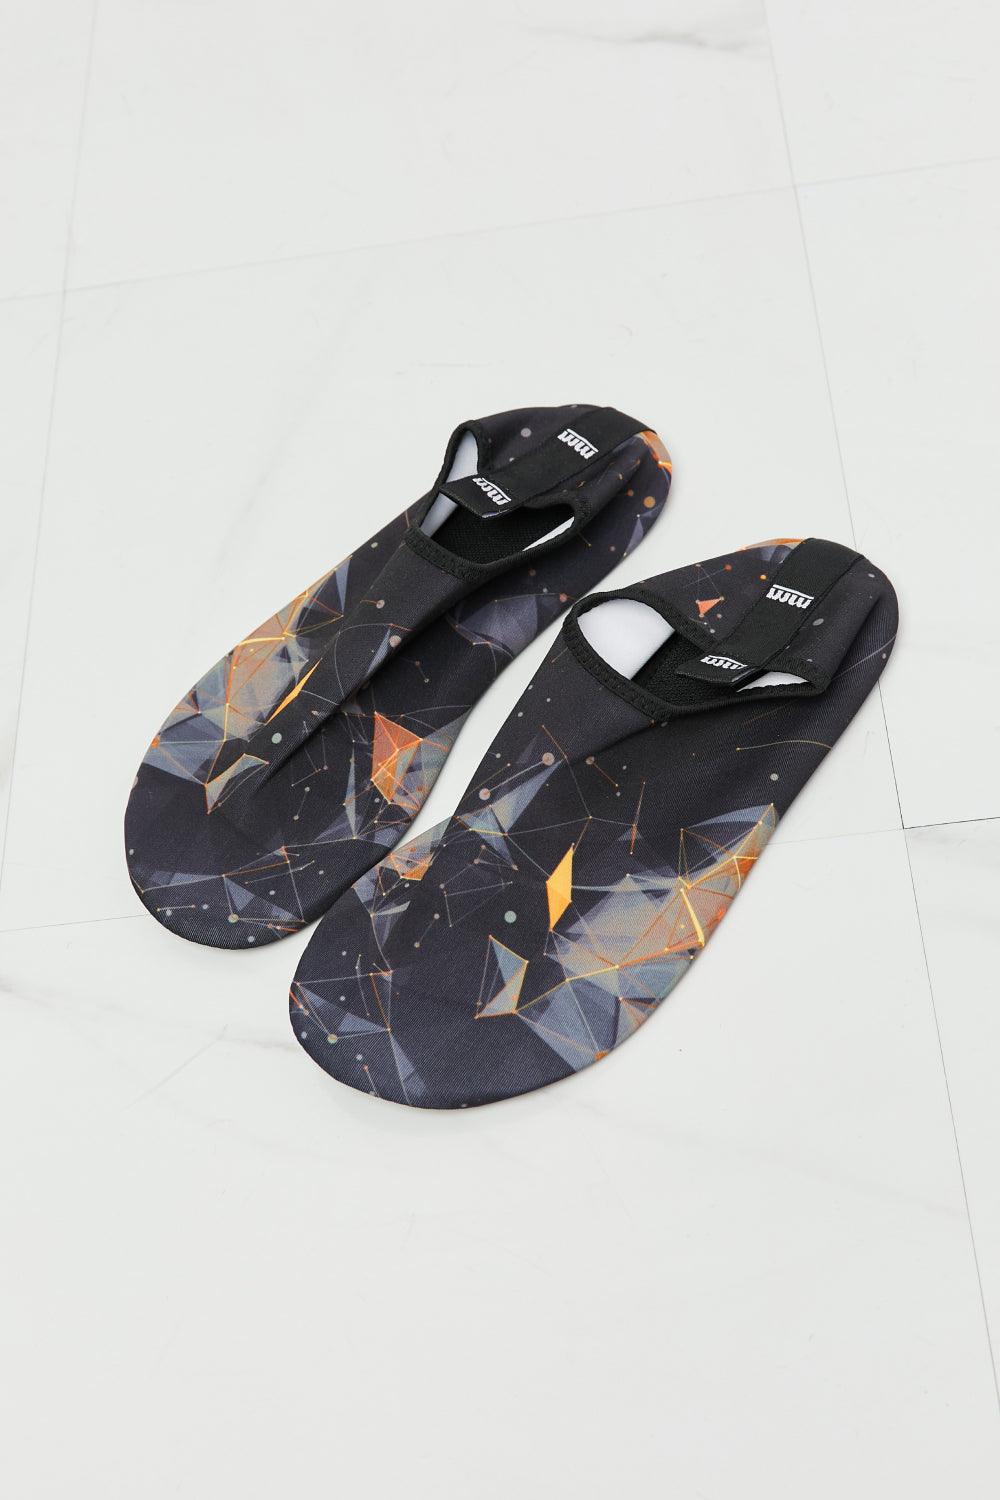 MMshoes On The Shore Water Shoes in Black/Orange - Jessiz Boutique